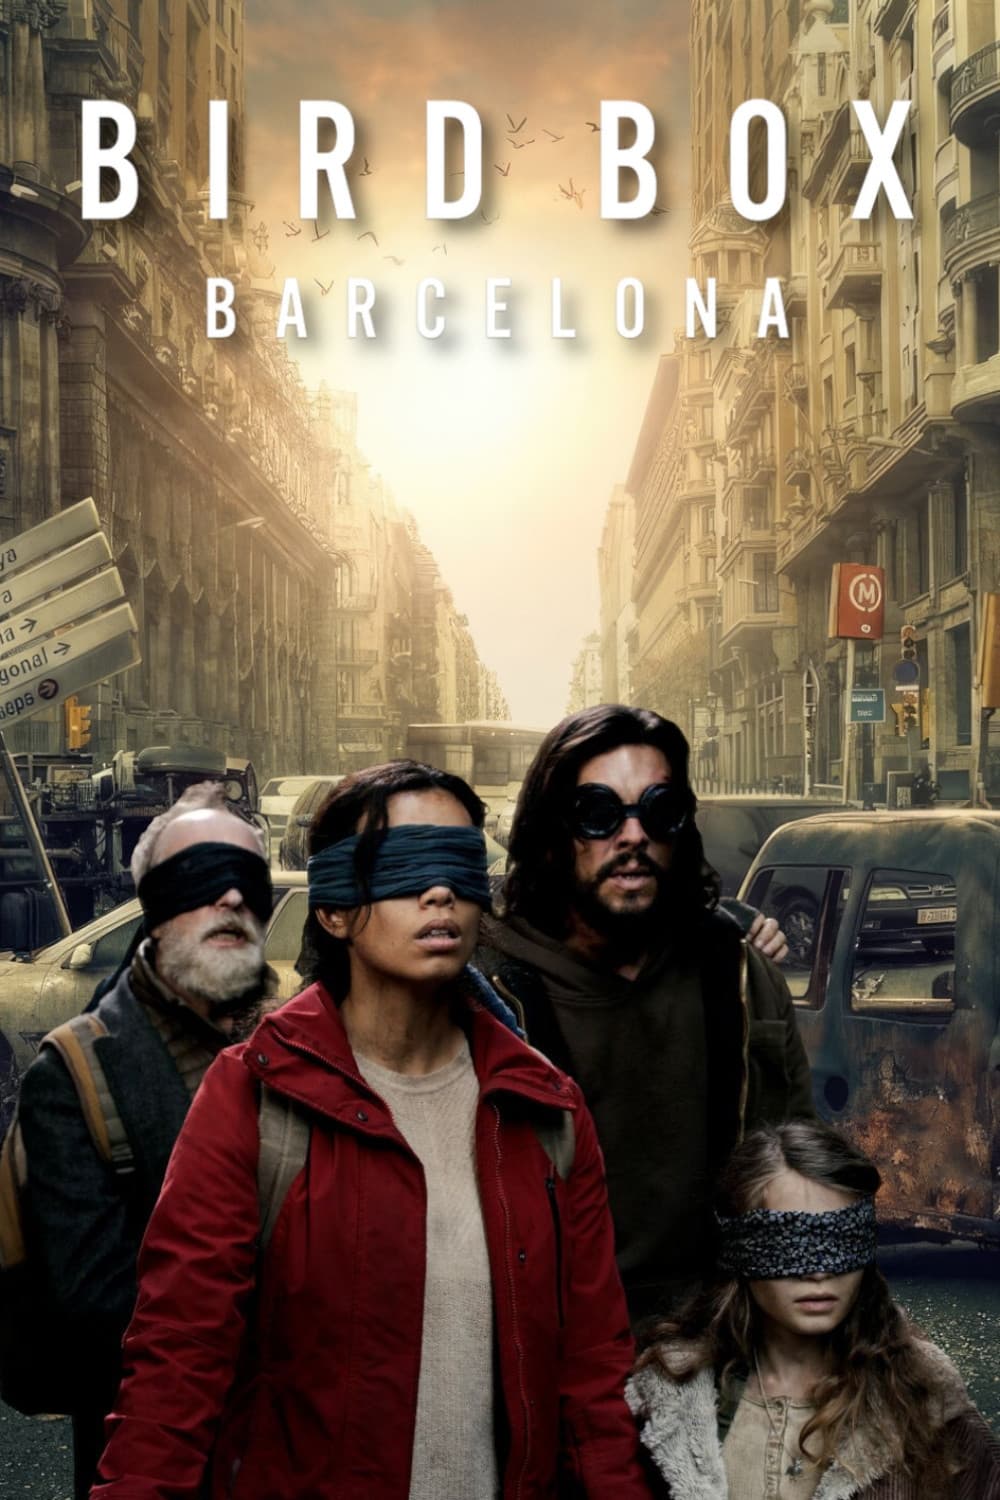 [WATCH 39+] Bird Box Barcelona (2023) FULL MOVIE ONLINE FREE ENGLISH/Dub/SUB Thriller STREAMINGS ������️ Movie Poster